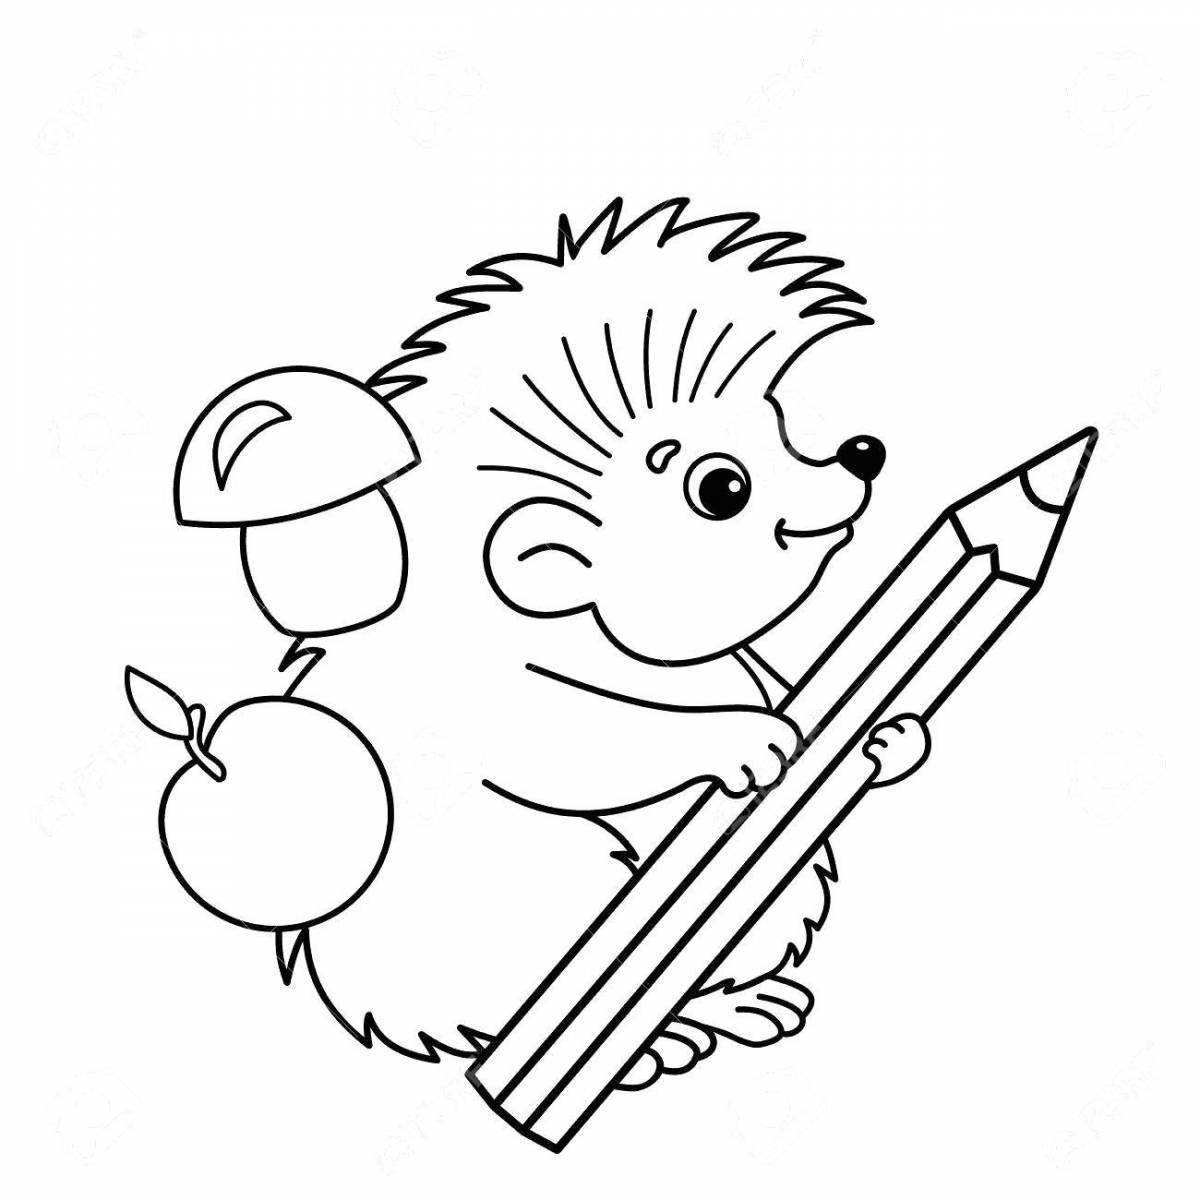 Bright cute hedgehog coloring book